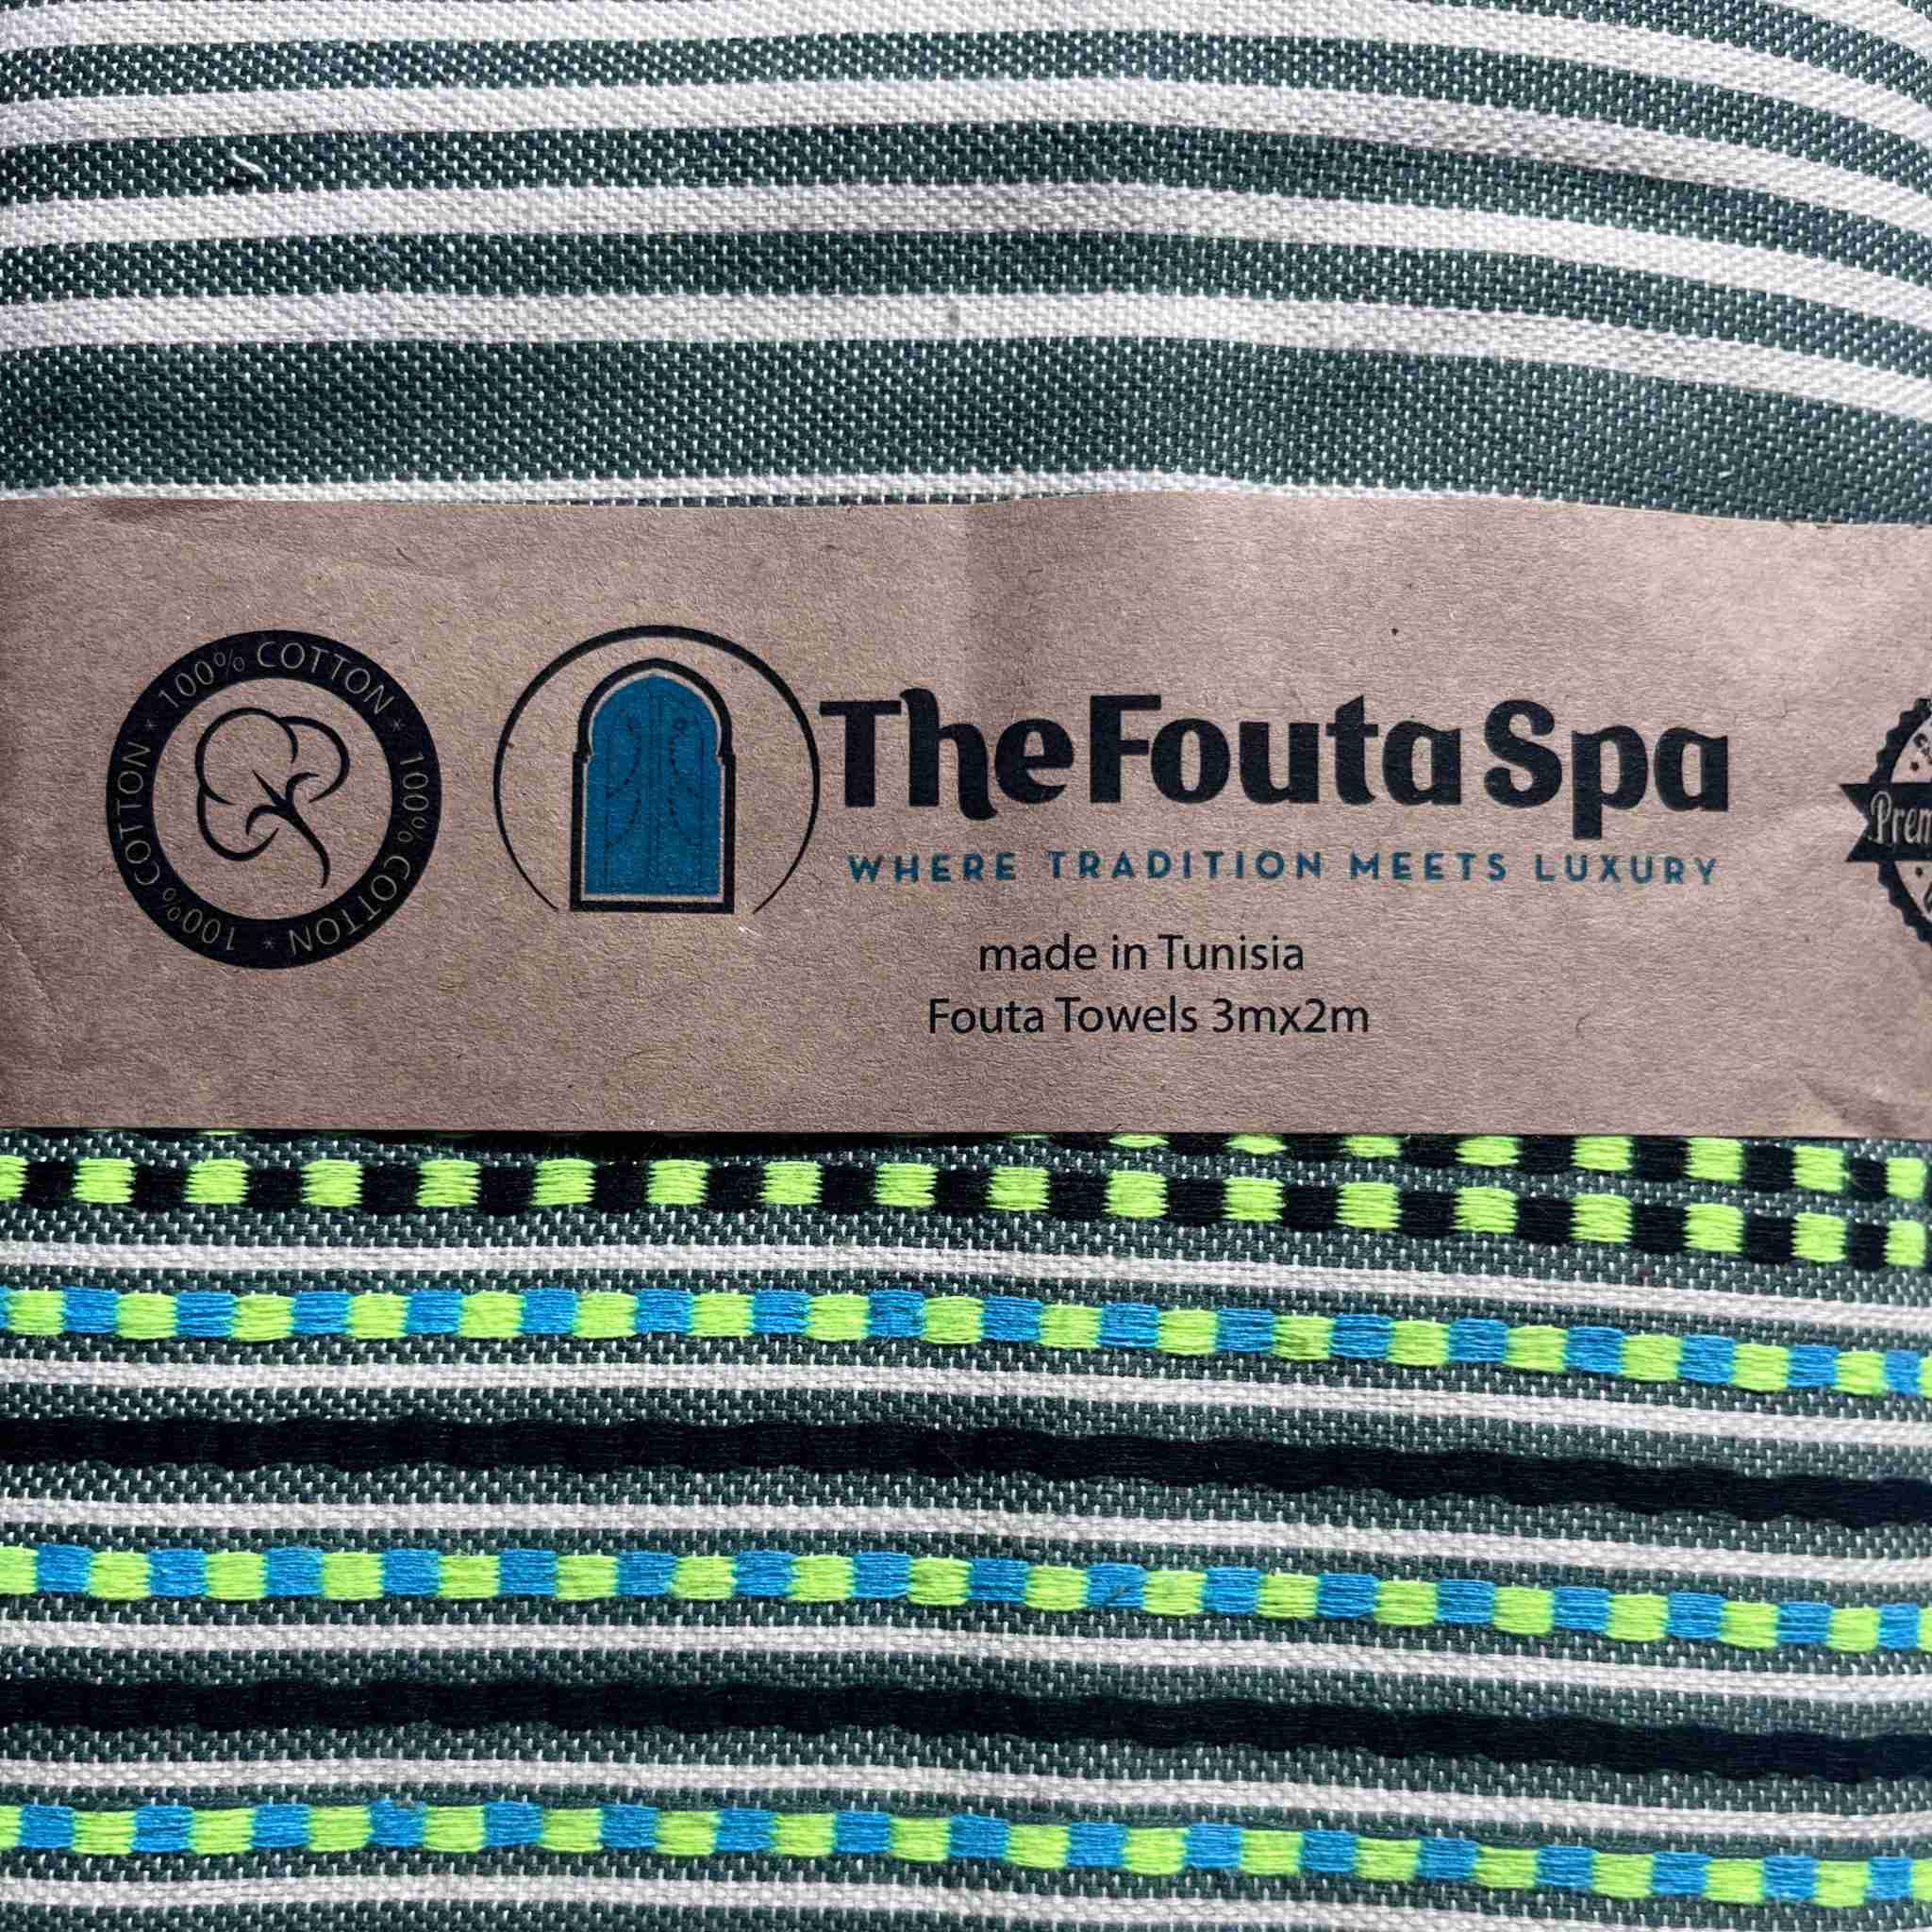 Oversized Fouta Beach, Bath & Pool Towels - 100% Cotton! – The Fouta Spa